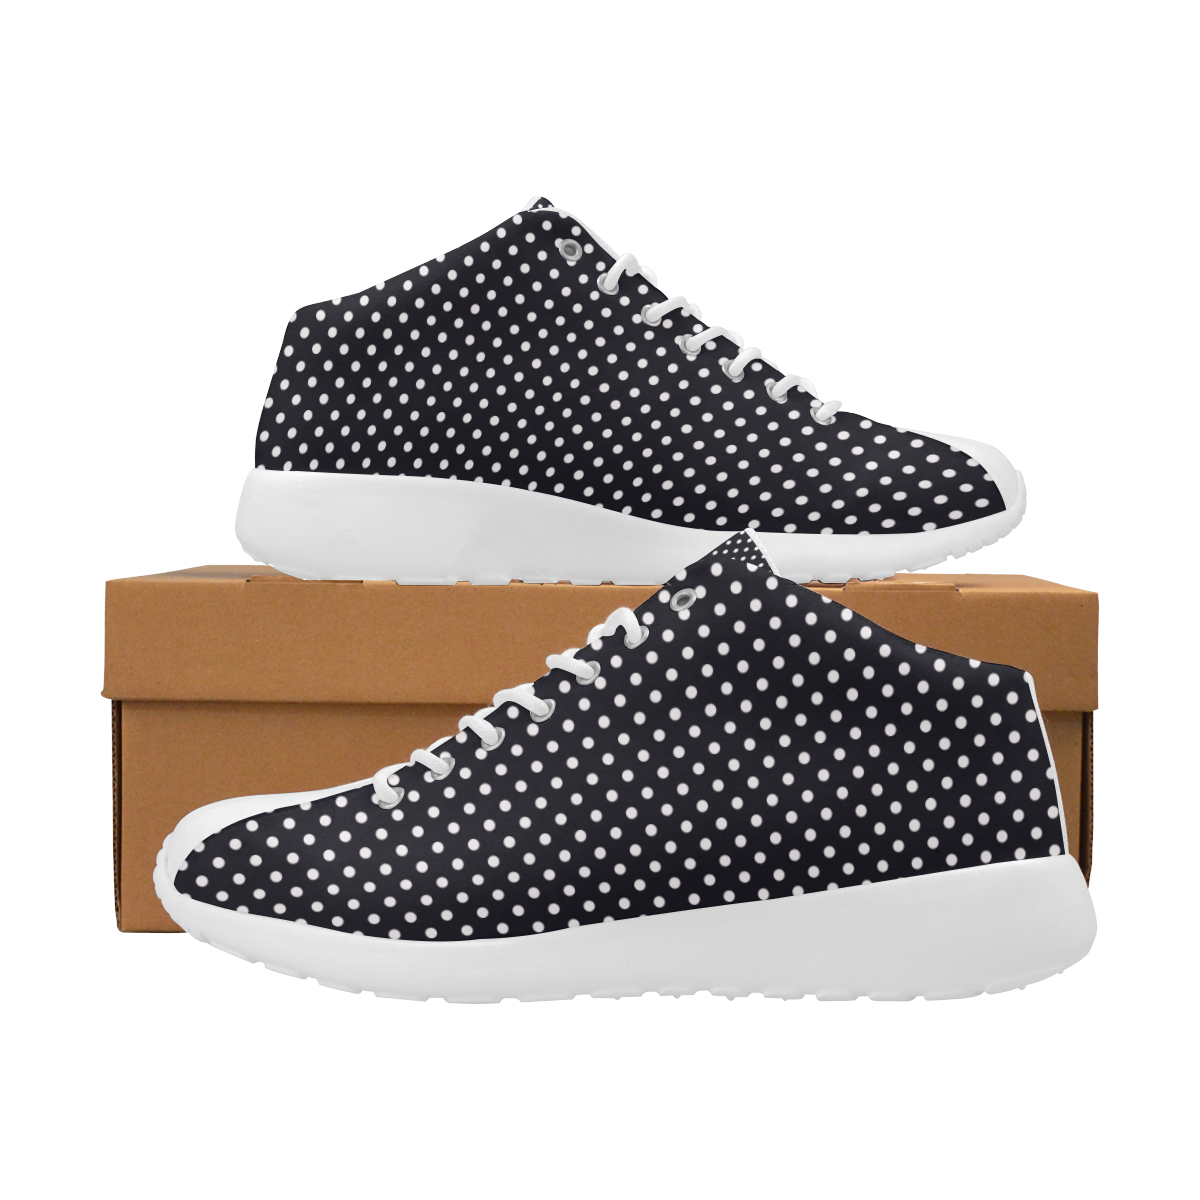 Black polka dots Women's Basketball Training Shoes (Model 47502)